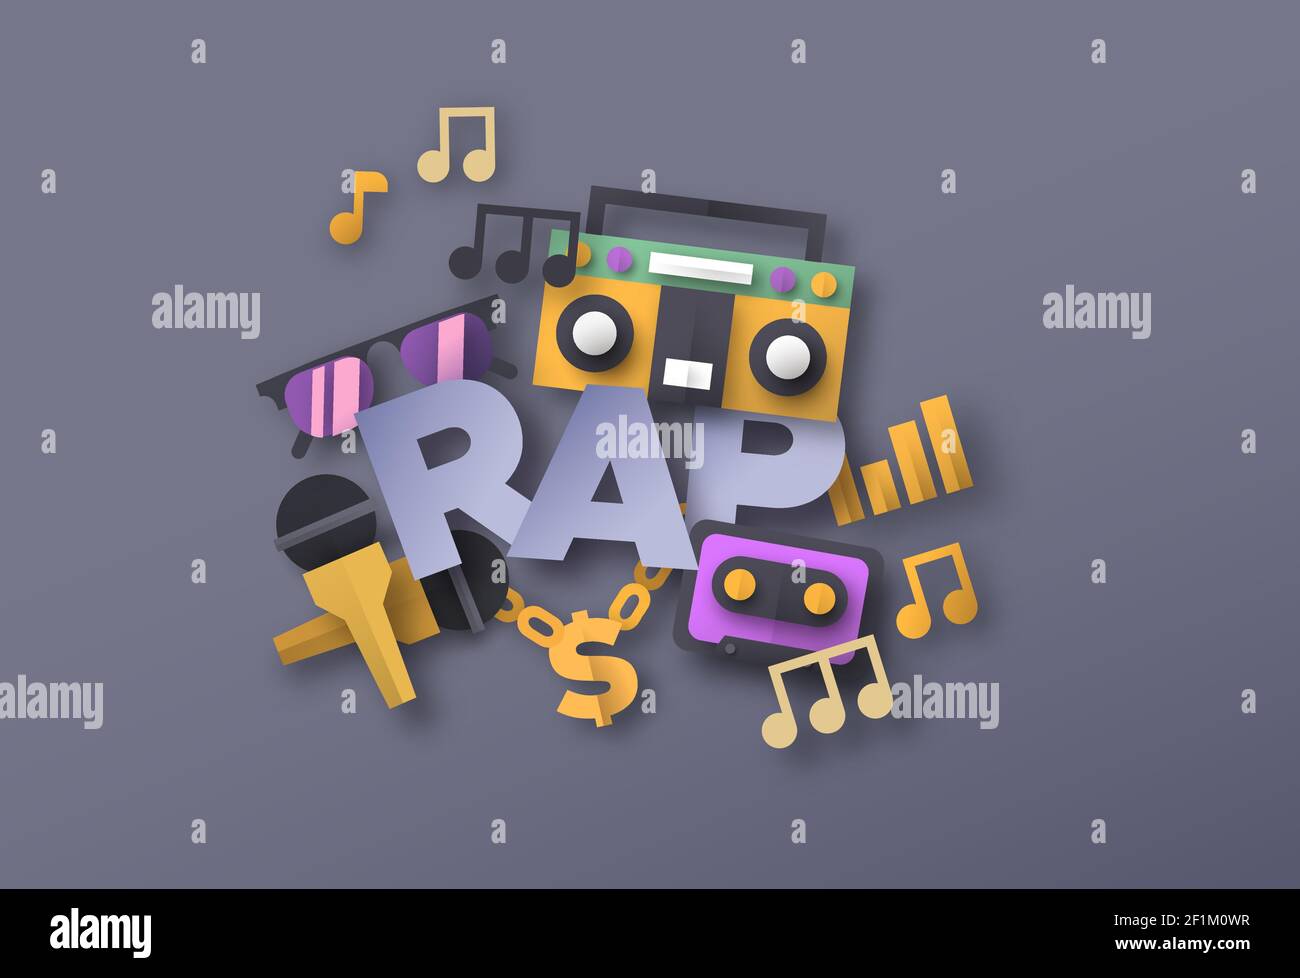 Hop hop rap band Stock Vector Images - Alamy